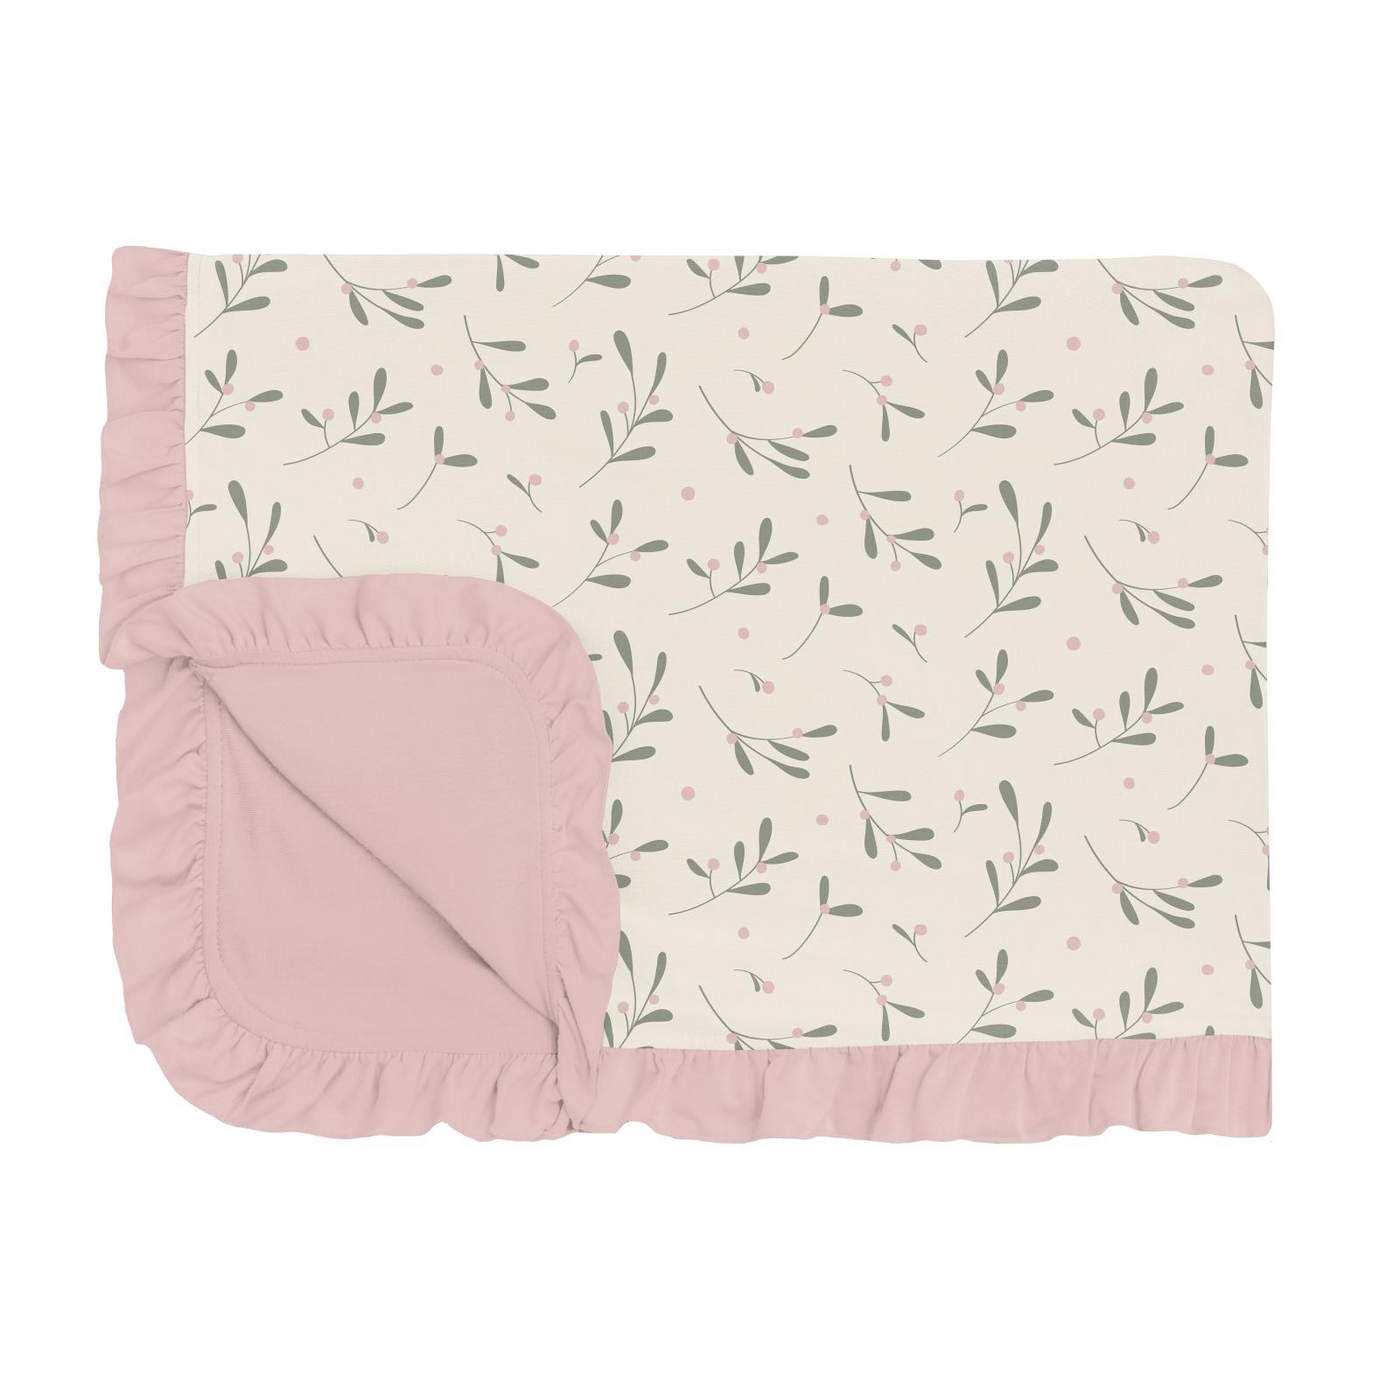 Kickee Pants Ruffle Toddler Blanket: Natural Mistletoe